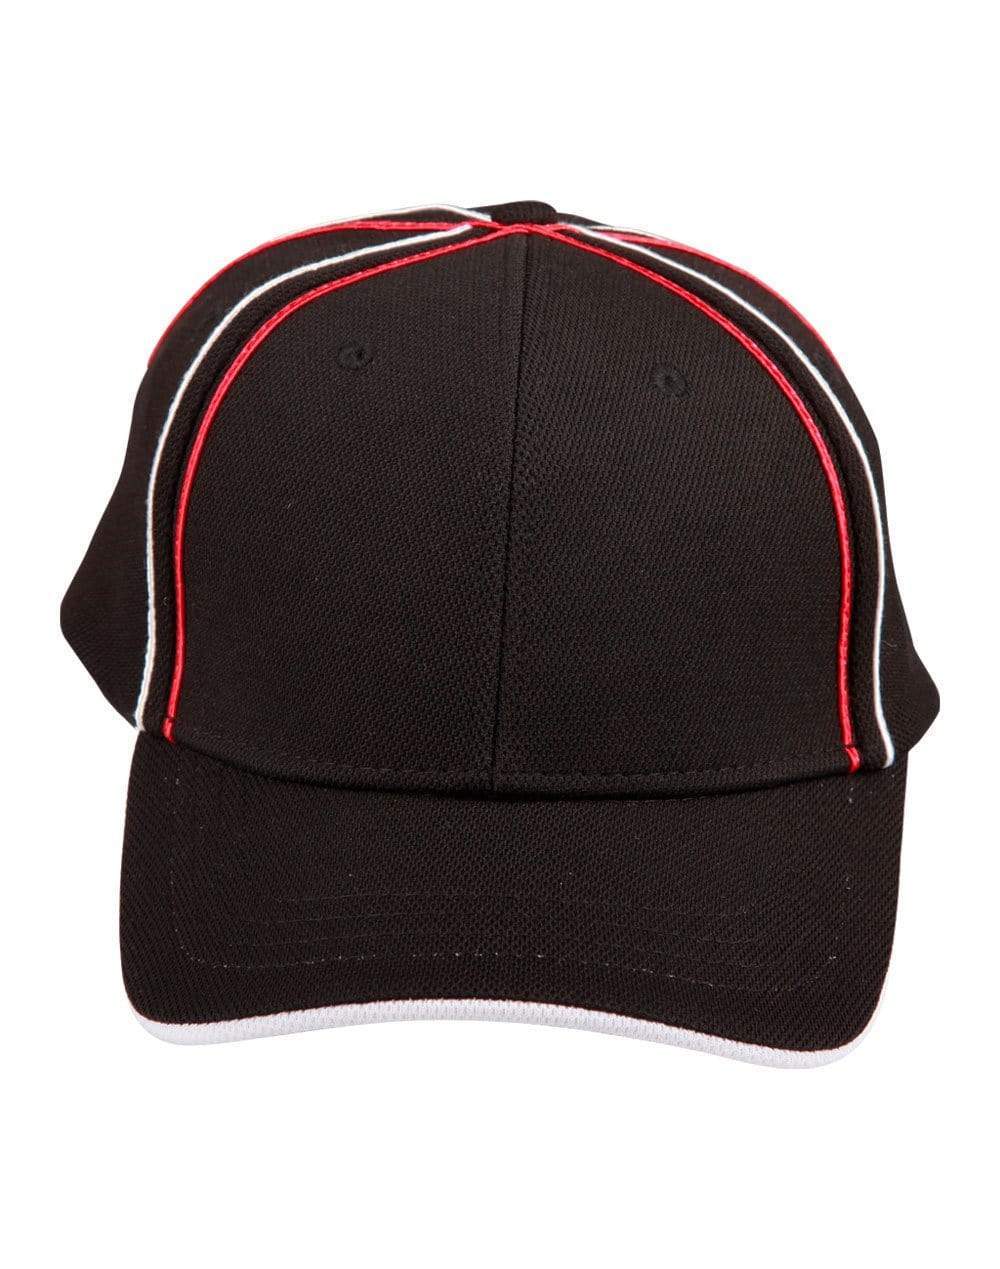 Winning Spirit Active Wear Black/White/Red / One size Tri-colour Pique Mesh Cap Ch76